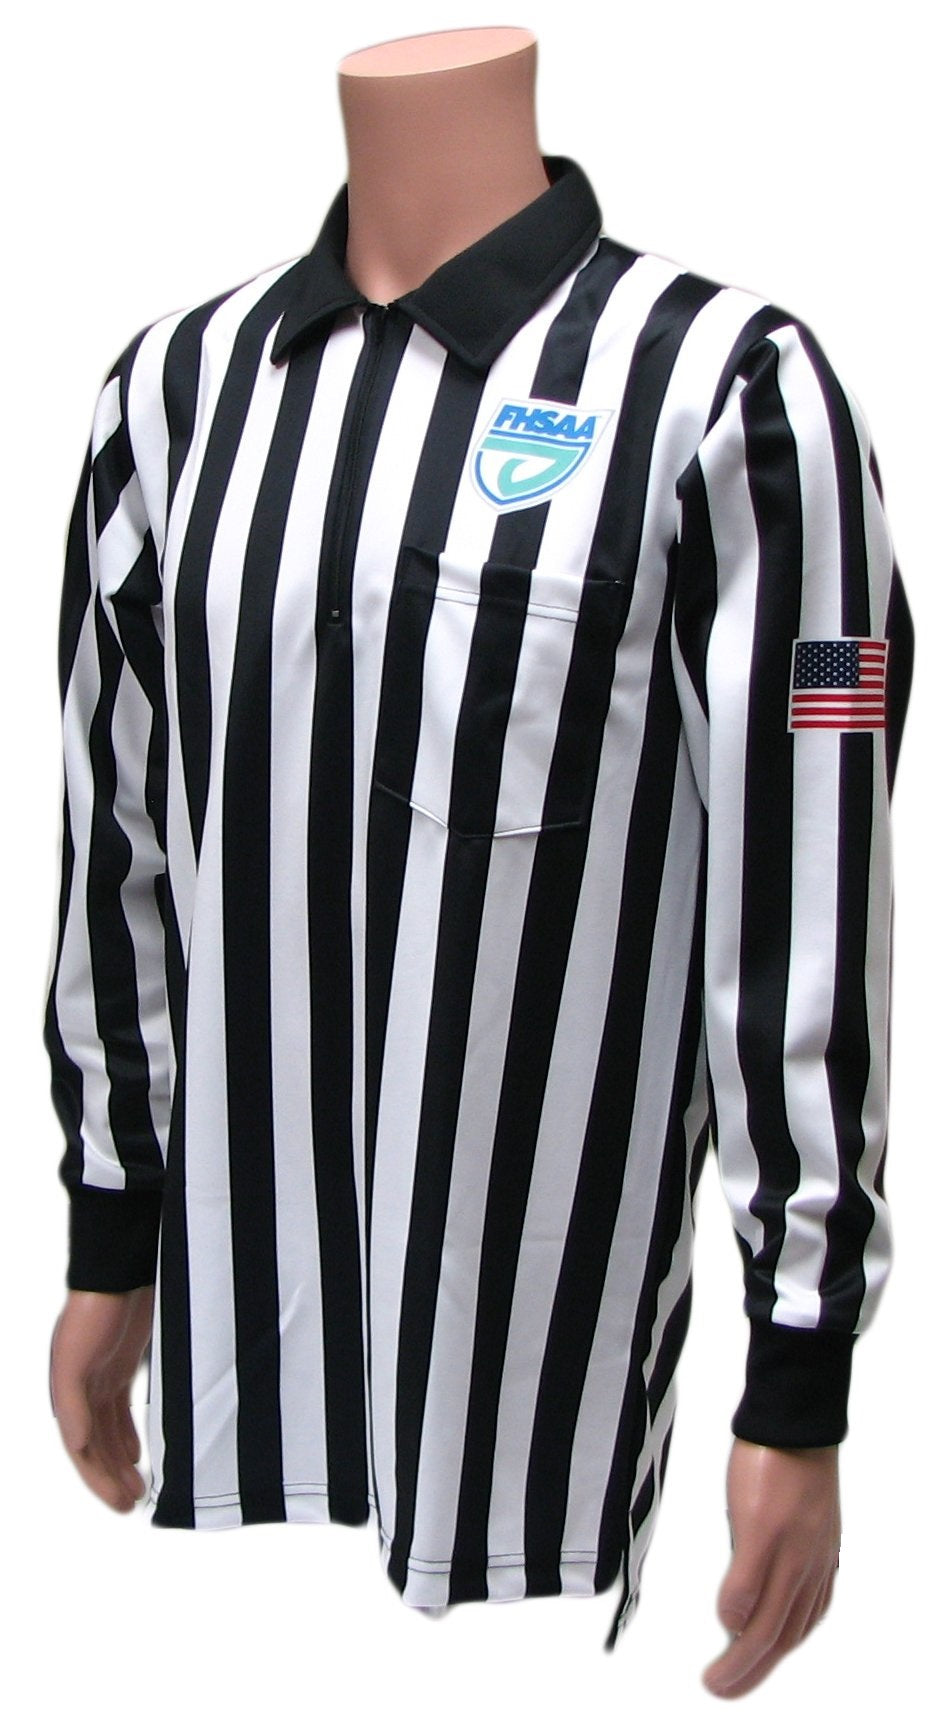 Louisiana (LHSOA) 1 Stripe Men's V-Neck Referee Shirt